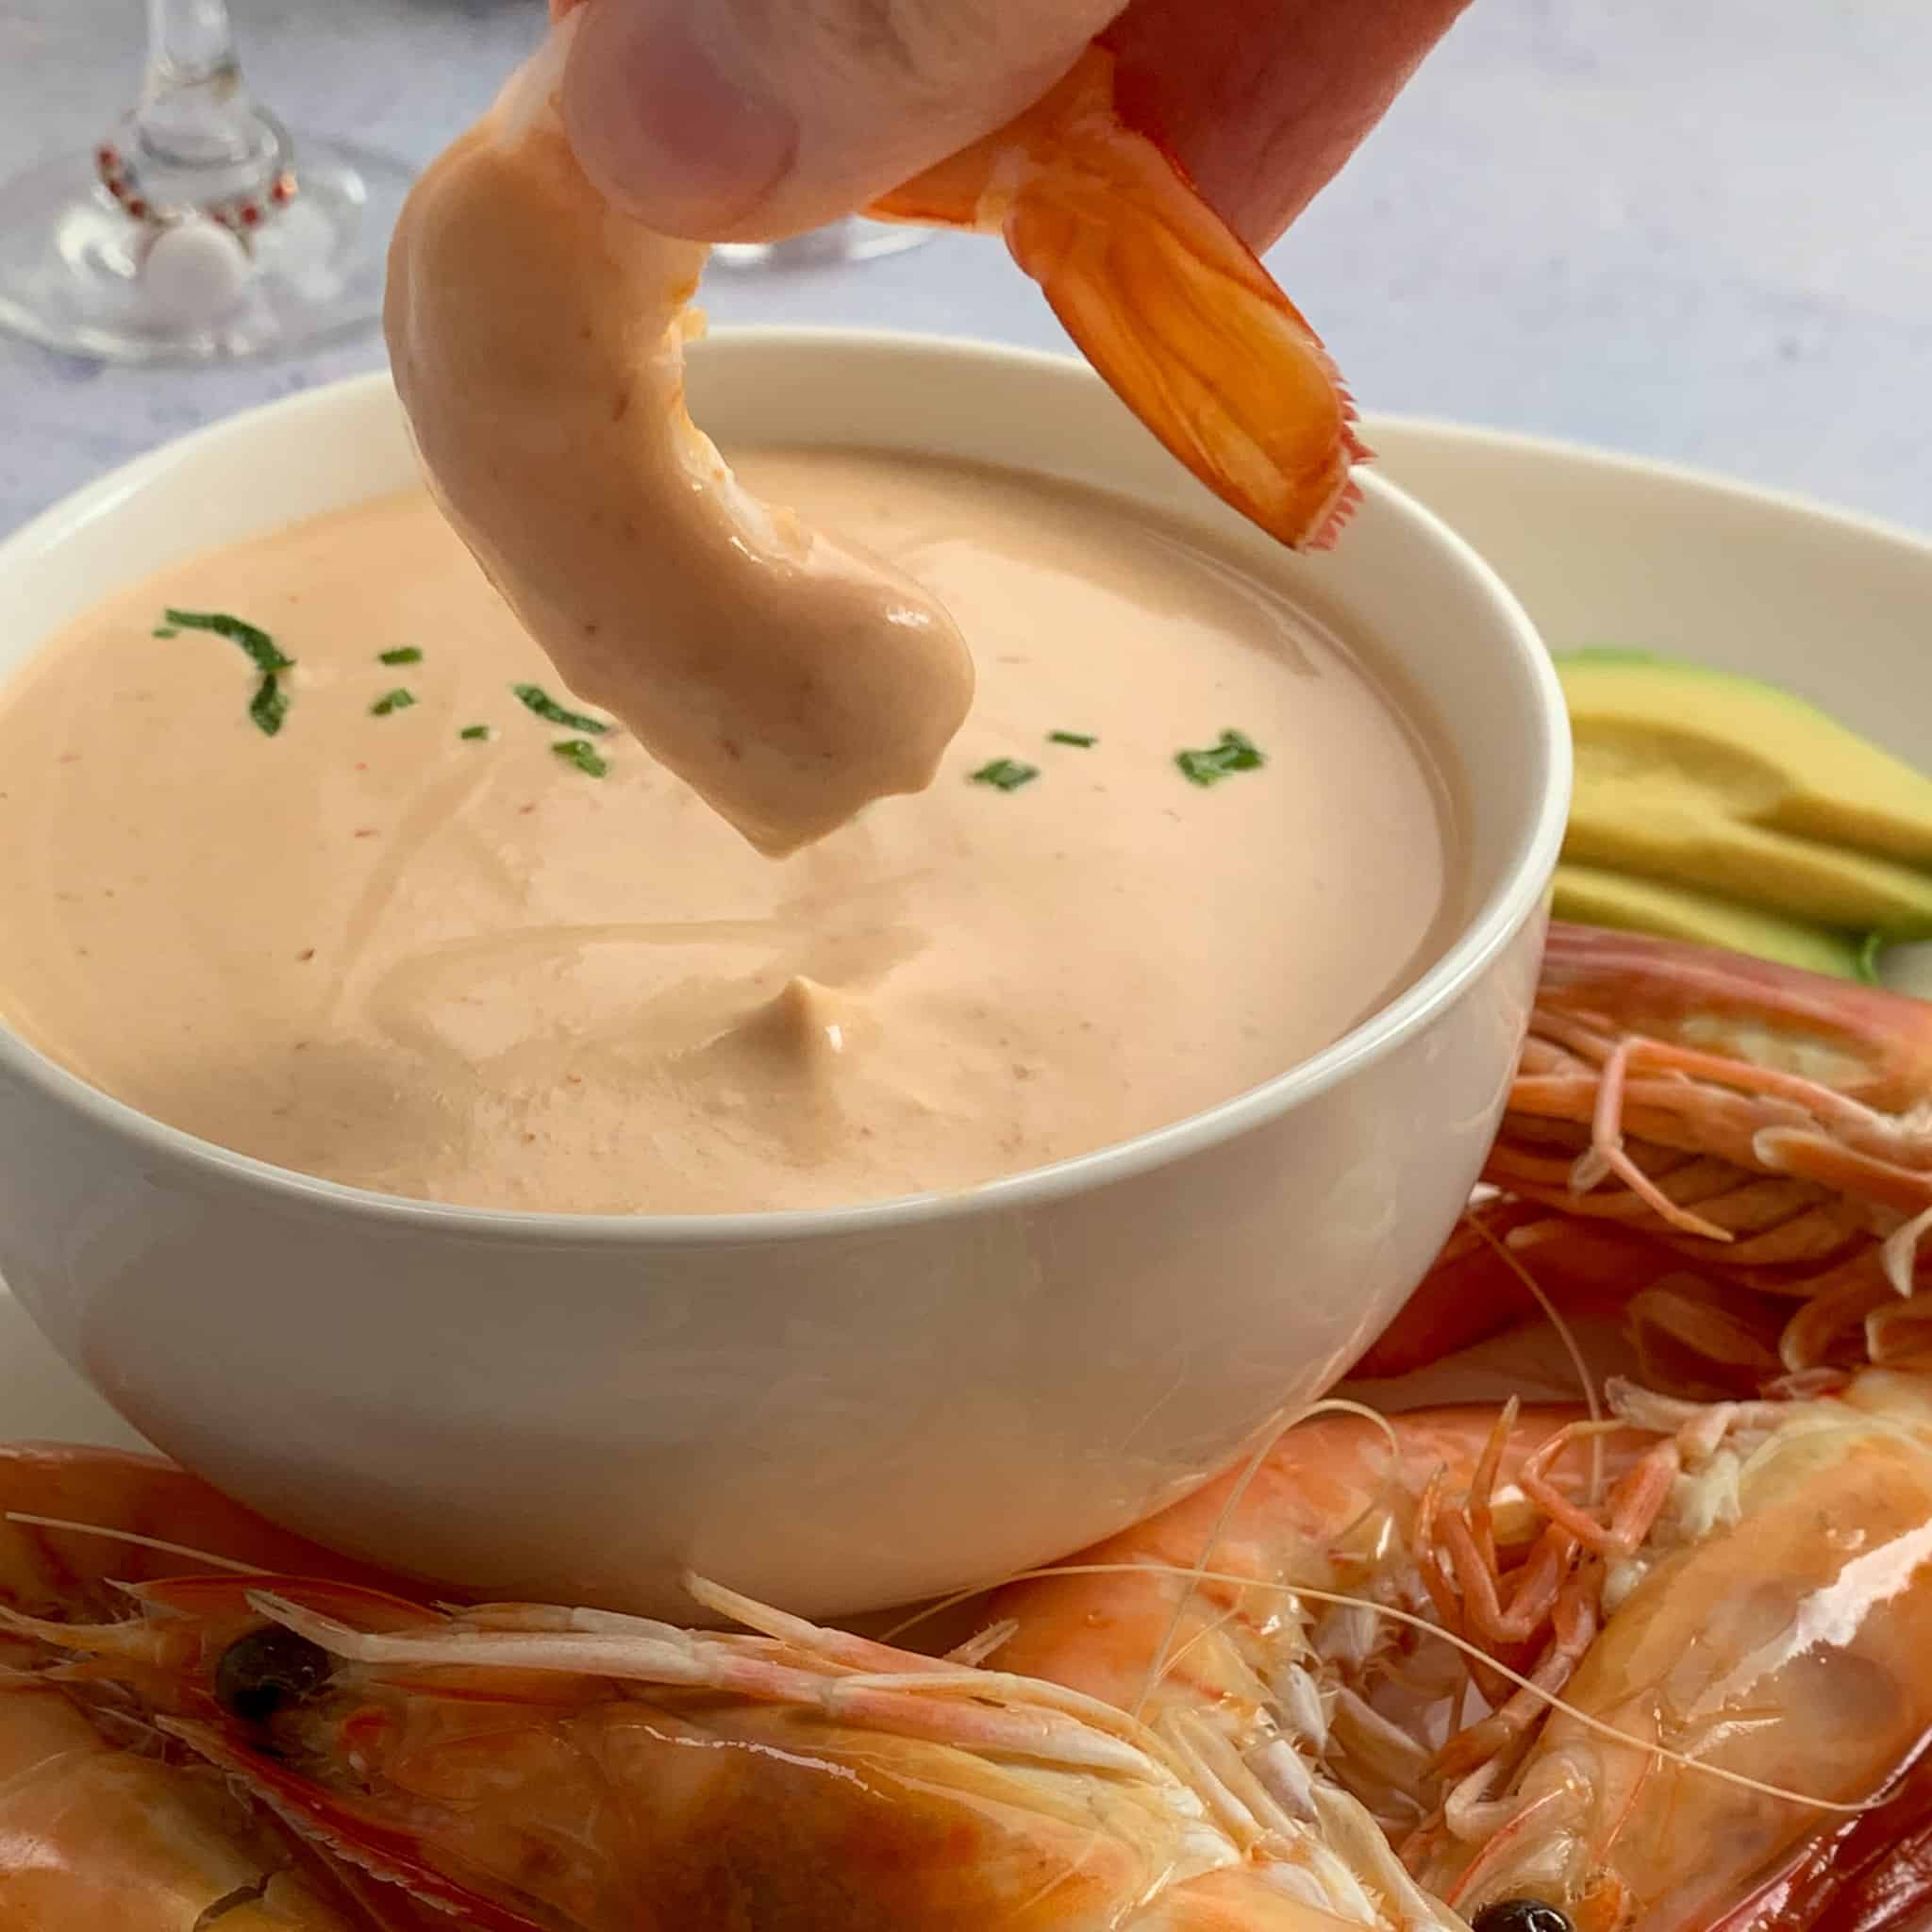 shrimp dipped into seafood sauce